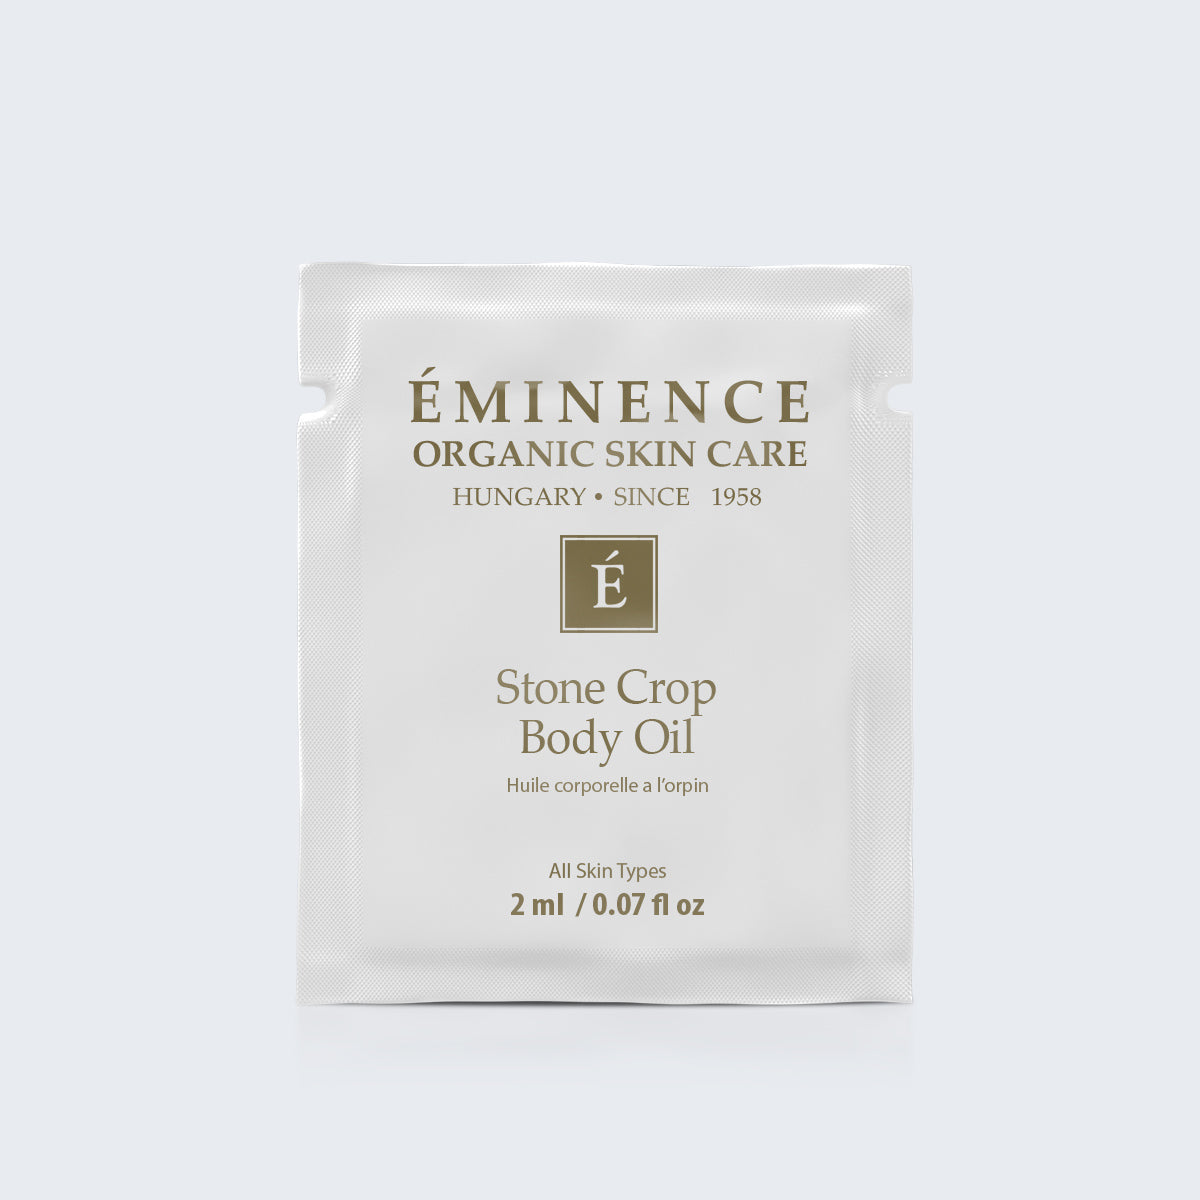 Eminence Organics Stone Crop Body Oil Card Sample